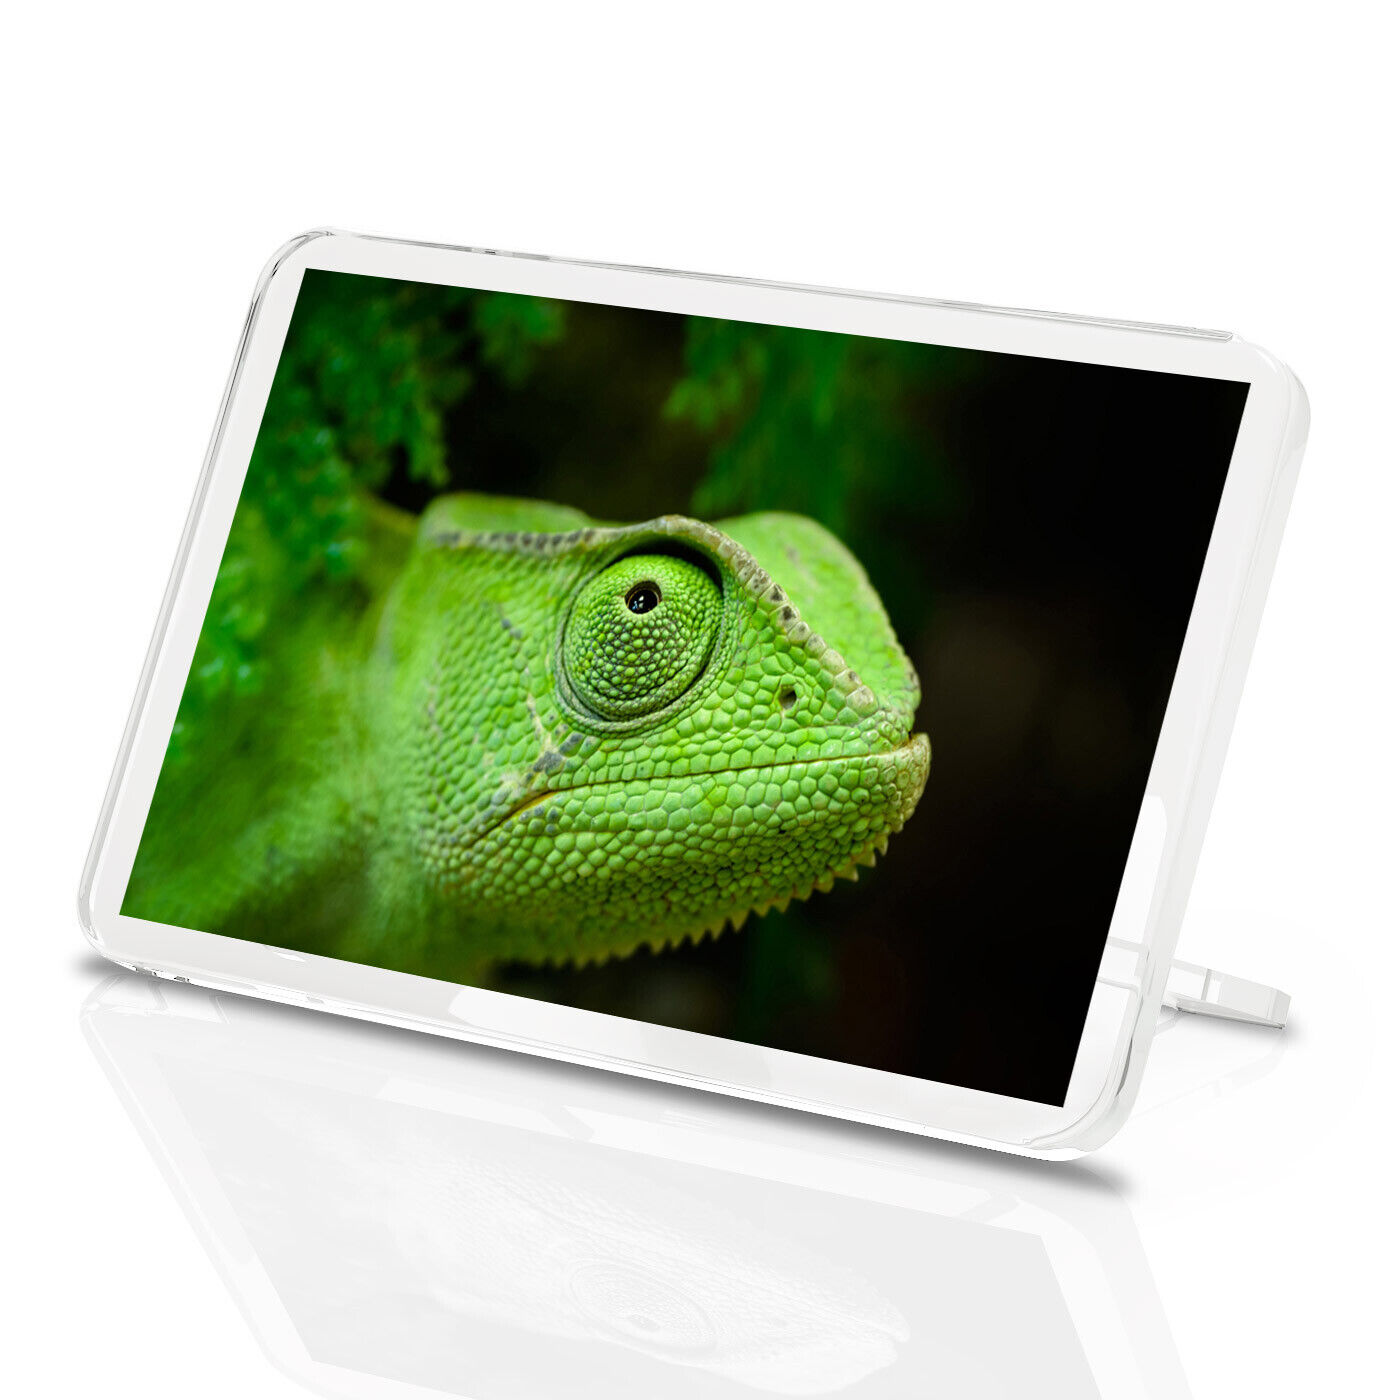 Green Chameleon Classic Fridge Magnet - Iguana Lizard Reptile Wild Gift #8590